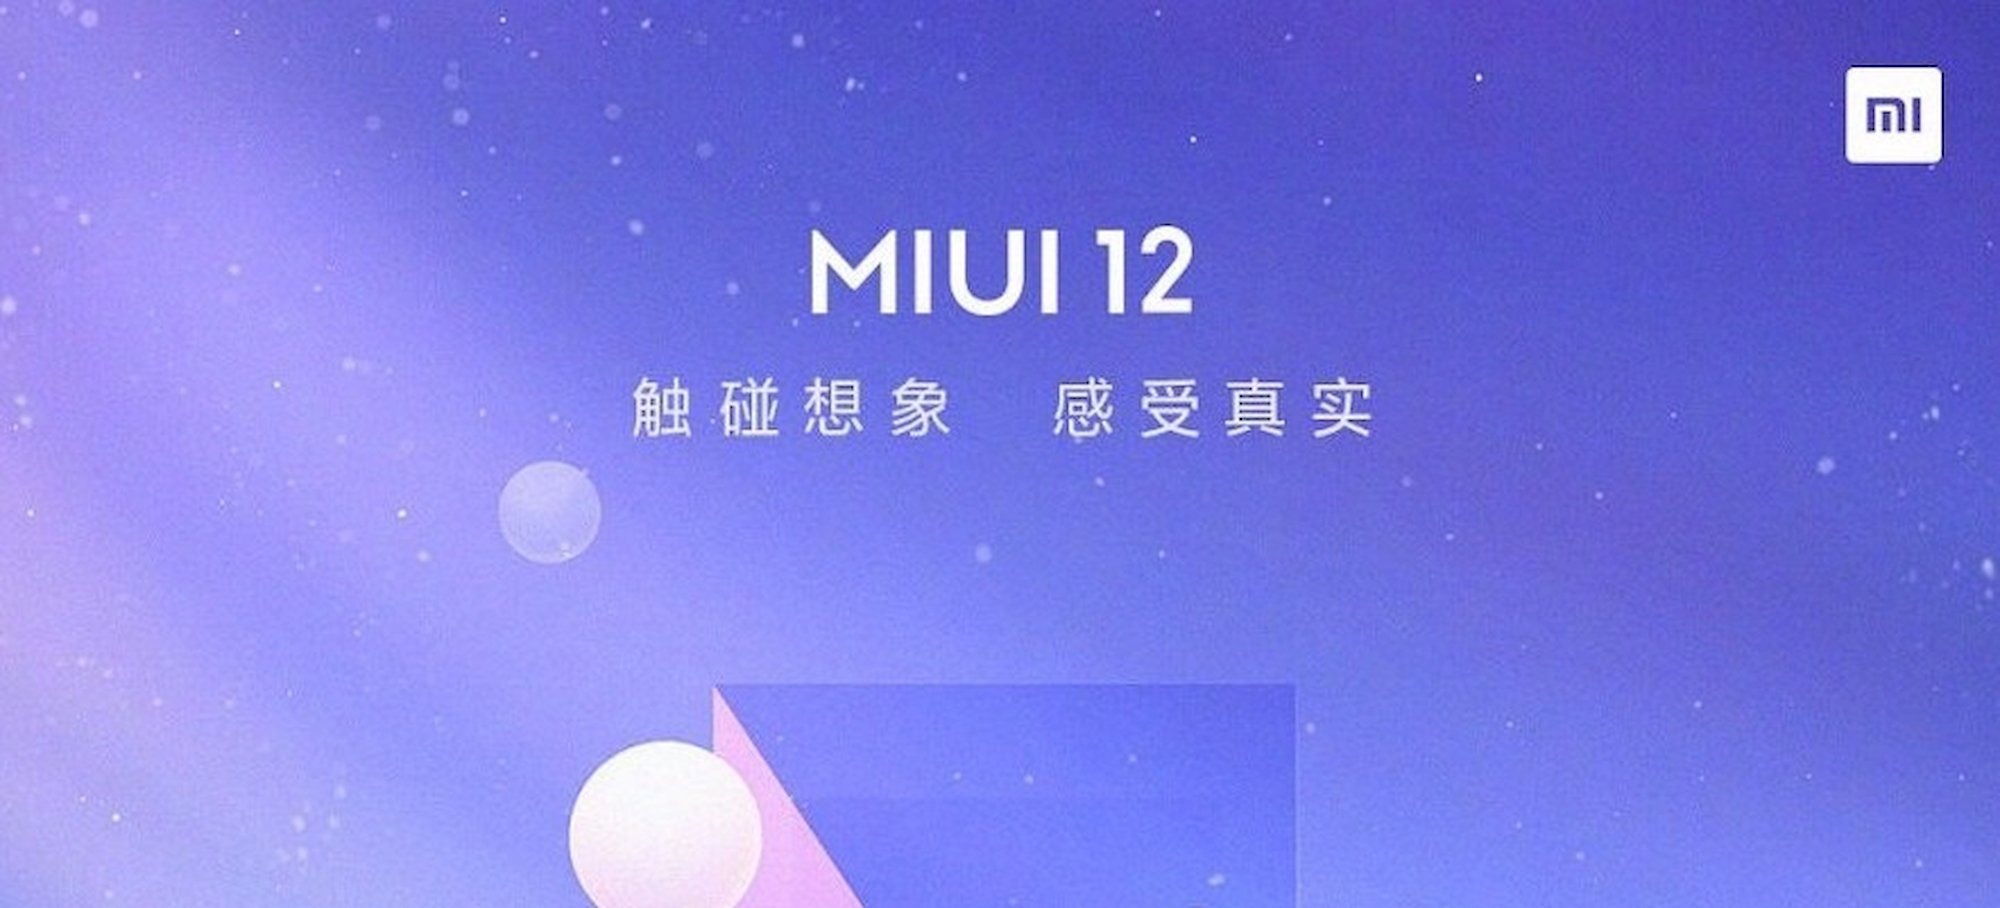 MIUI 12: قائمة الأجهزة التي ستتلقى واجهة Xiaomi الجديدة 2